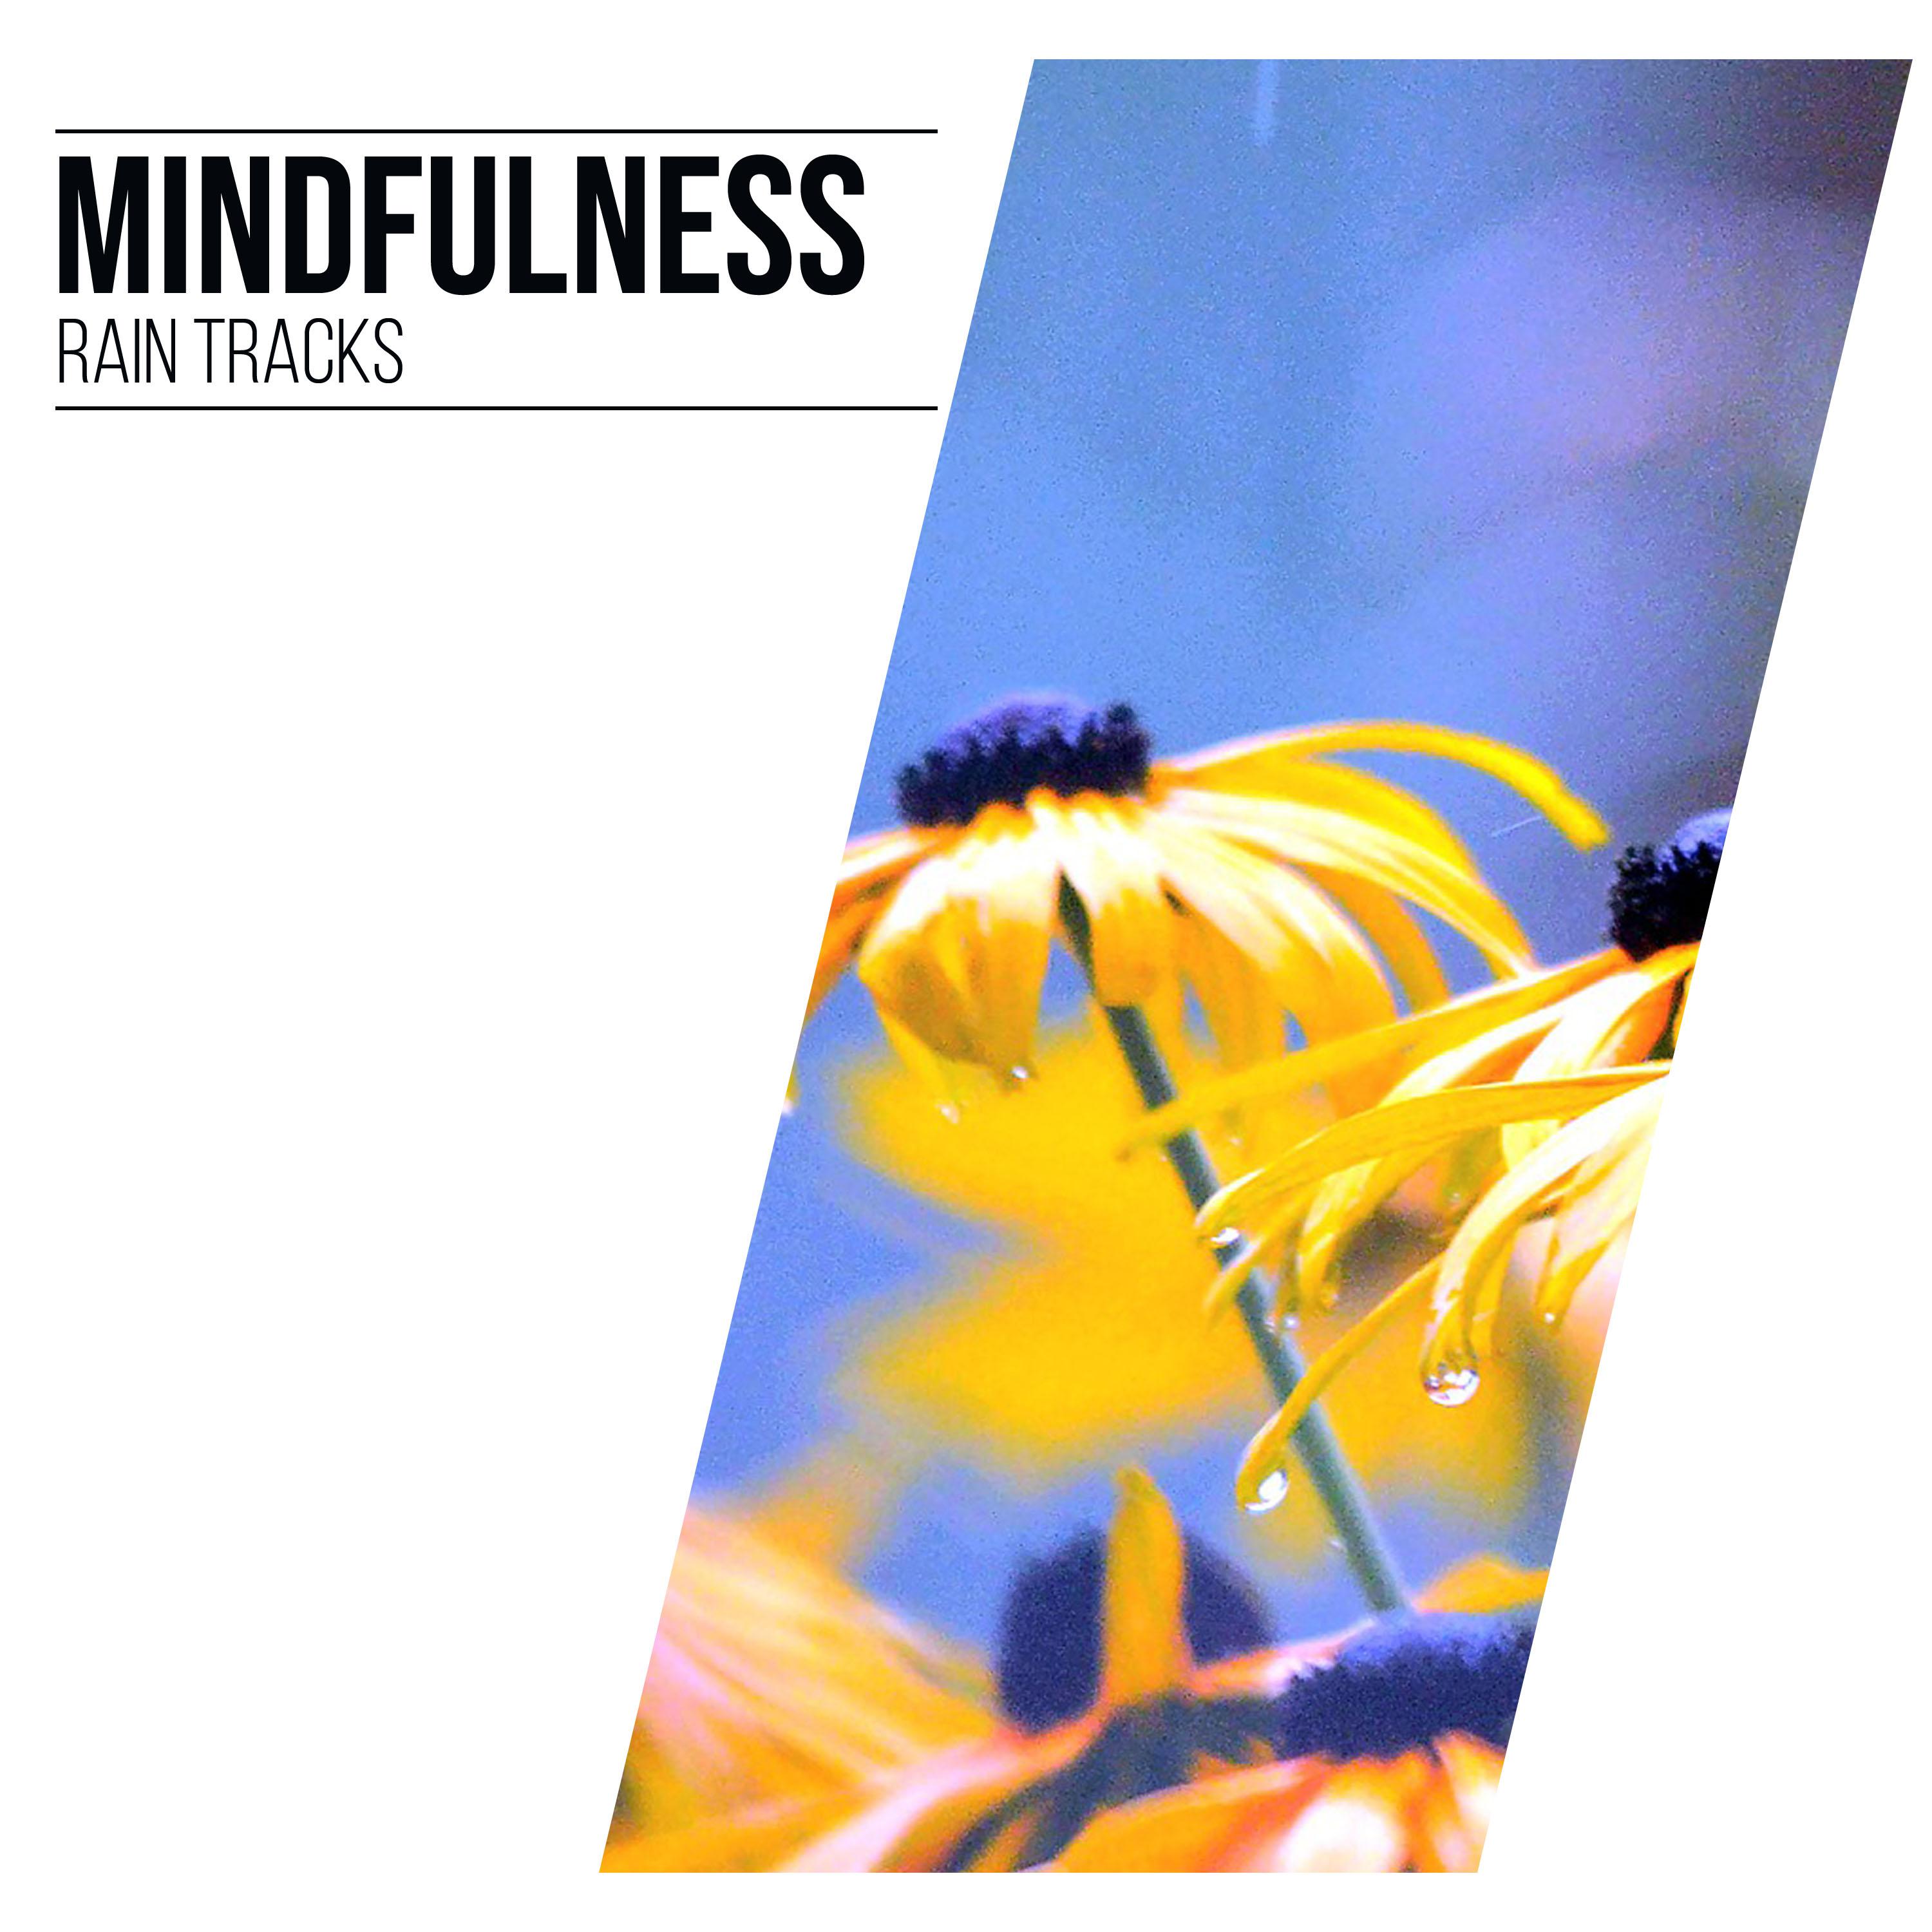 11 Mindfulness Rain Tracks for Enhanced Wellness